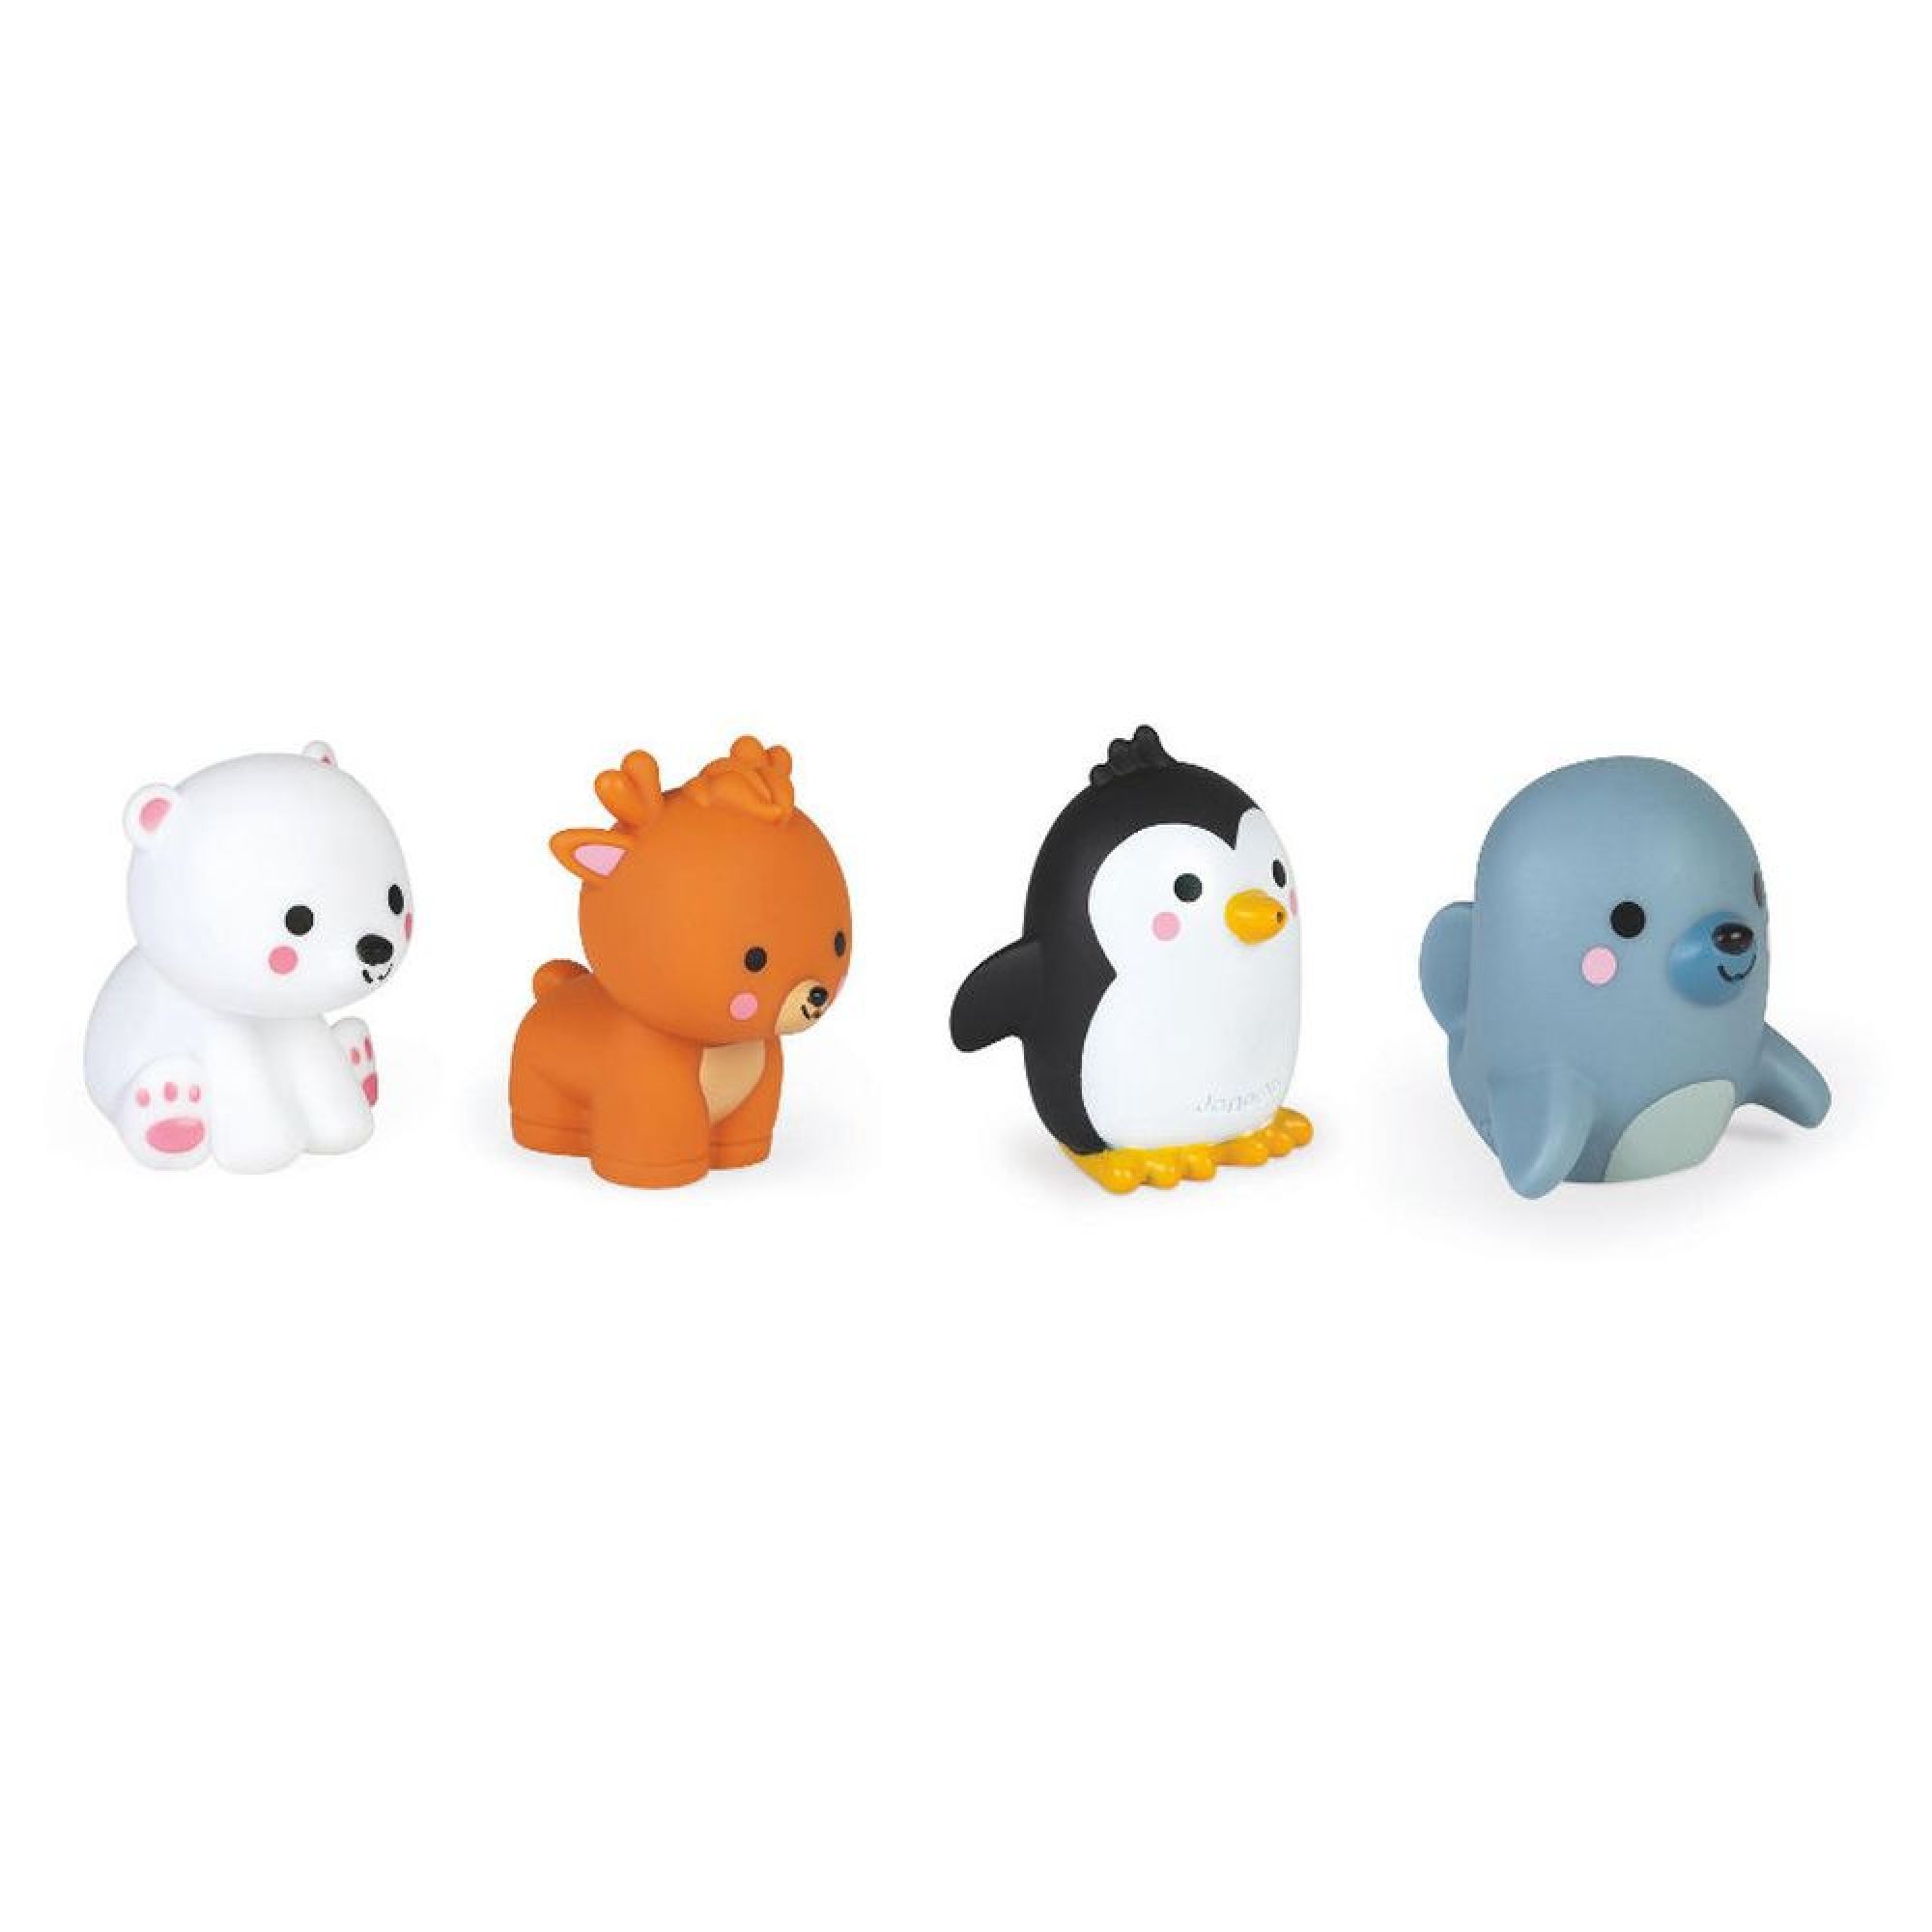 ② Pingouin jouet de bain Fisher Price — Jouets